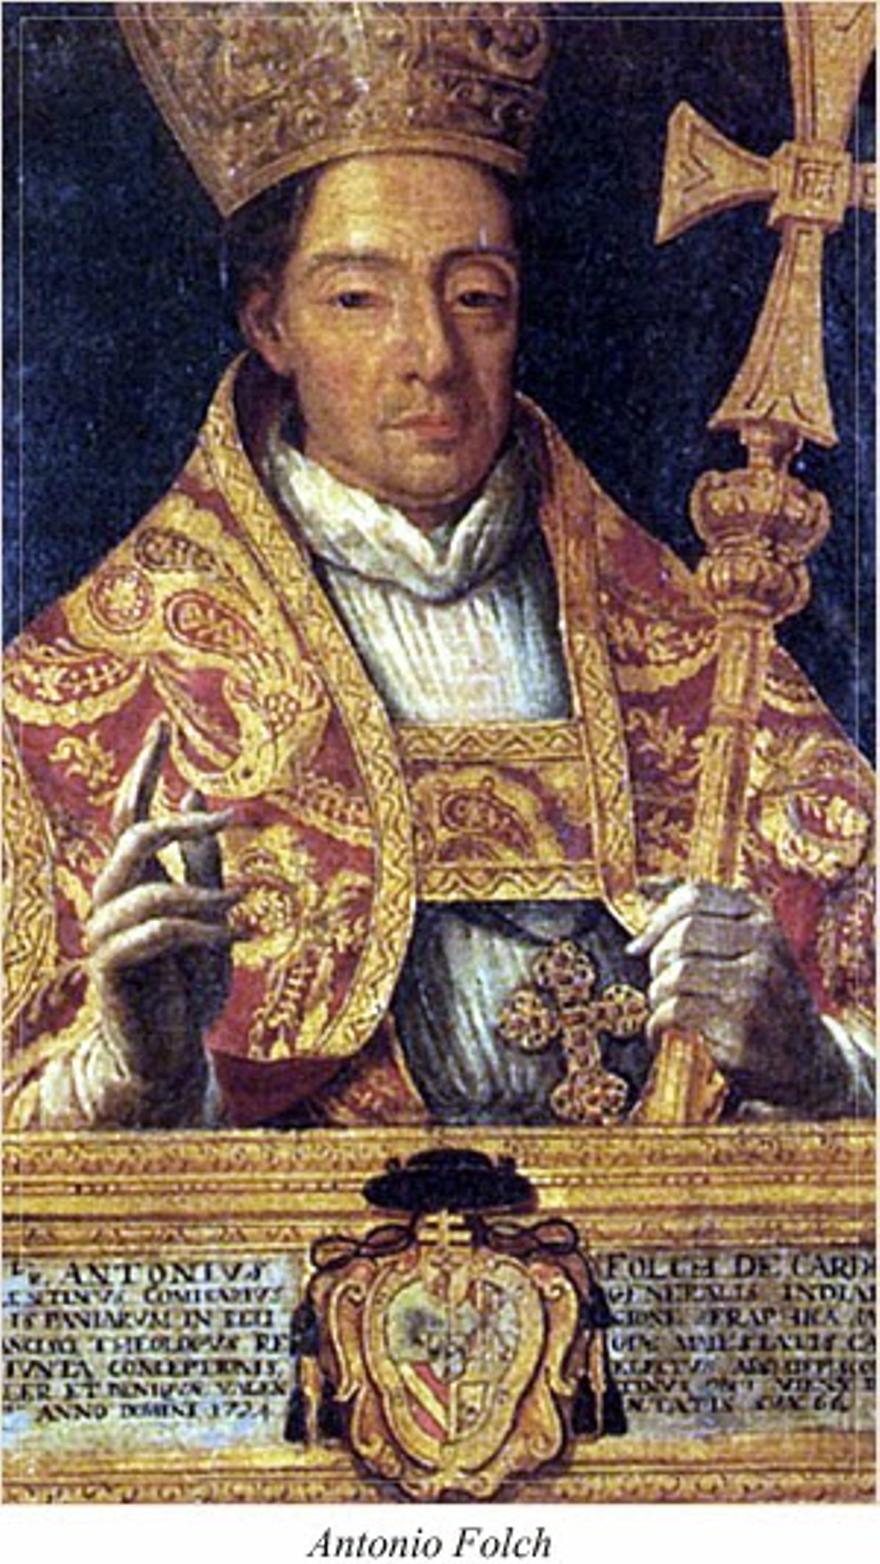 El arzobispo Folch Cardona.